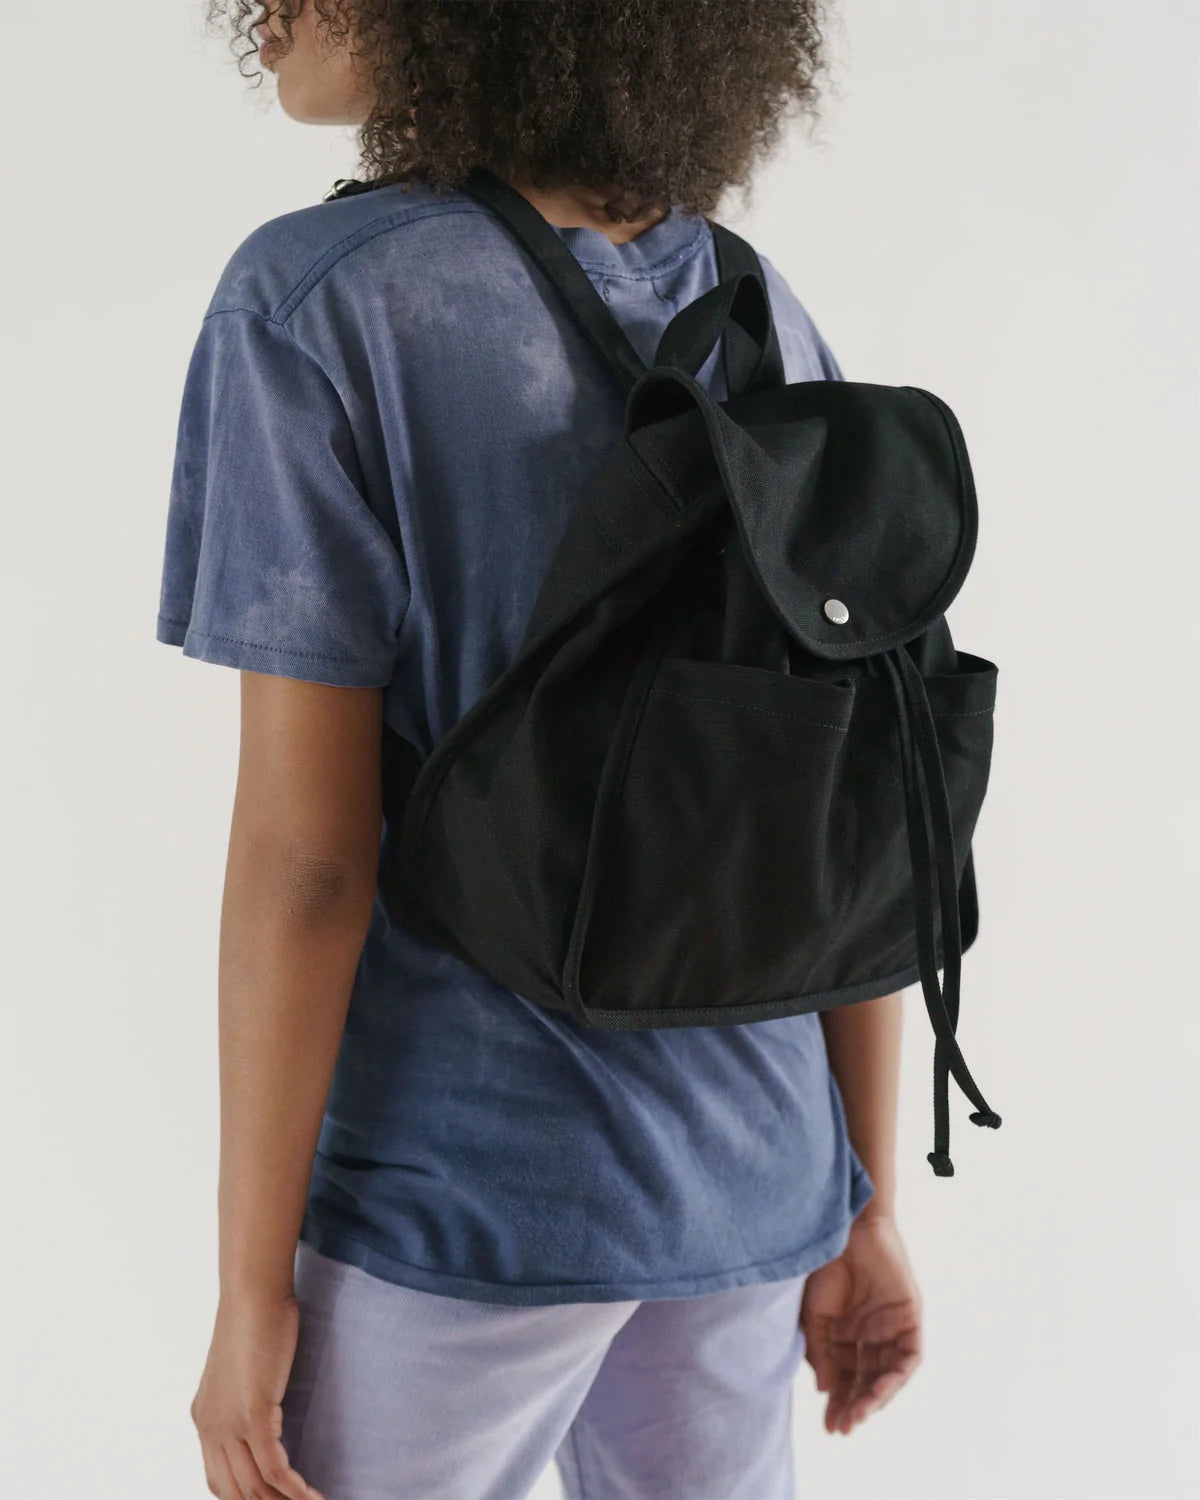 Baggu Drawstring Backpack - Black - Proper